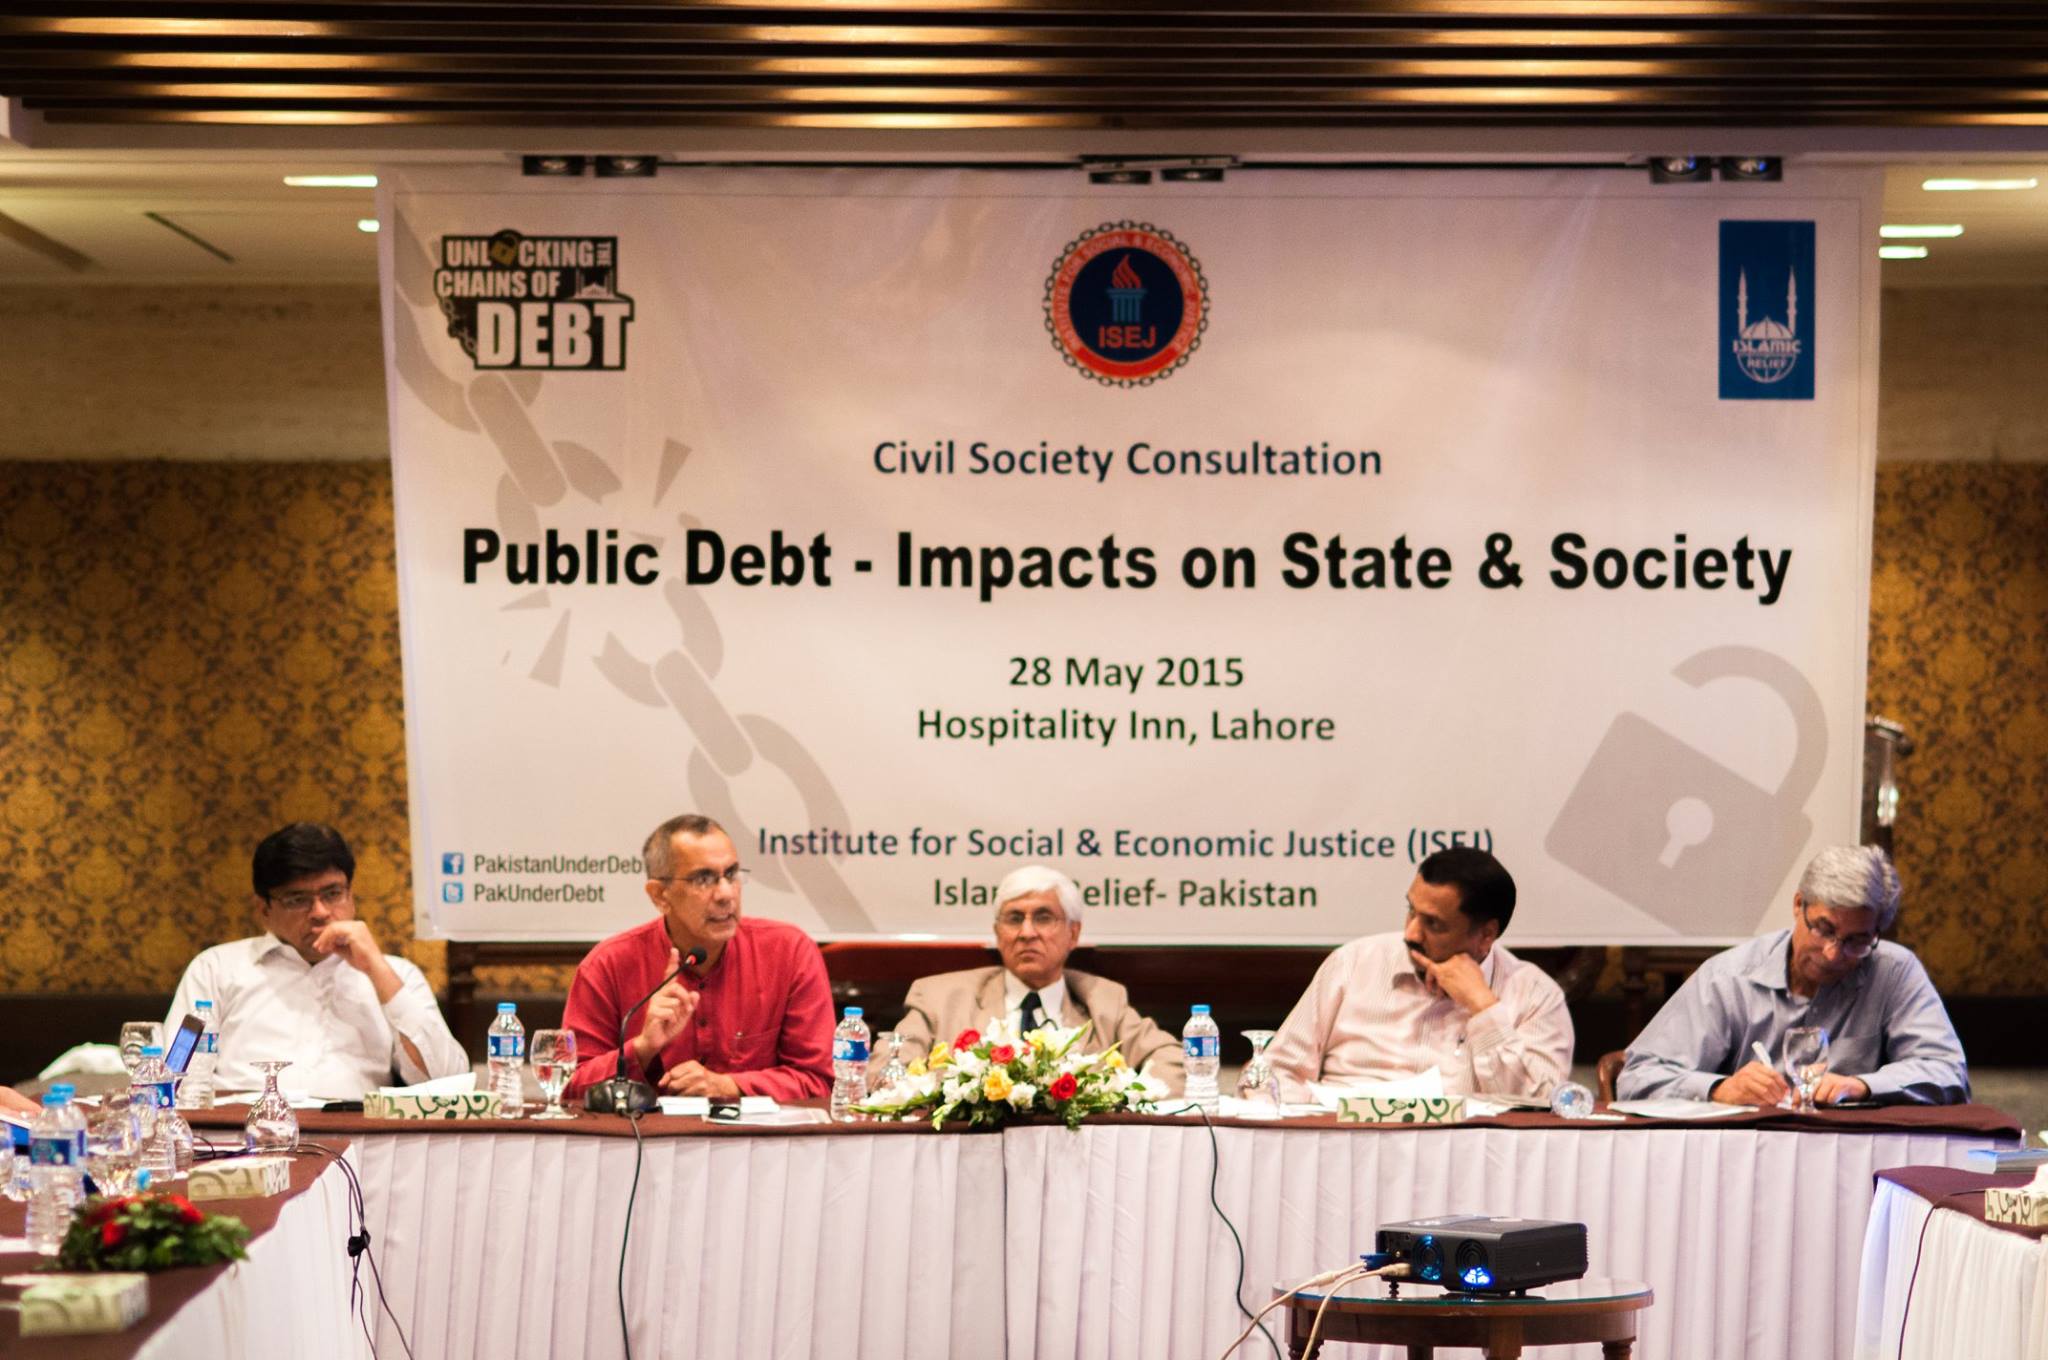 Civil Society consultation on Debt, 28 May 2015, Lahore